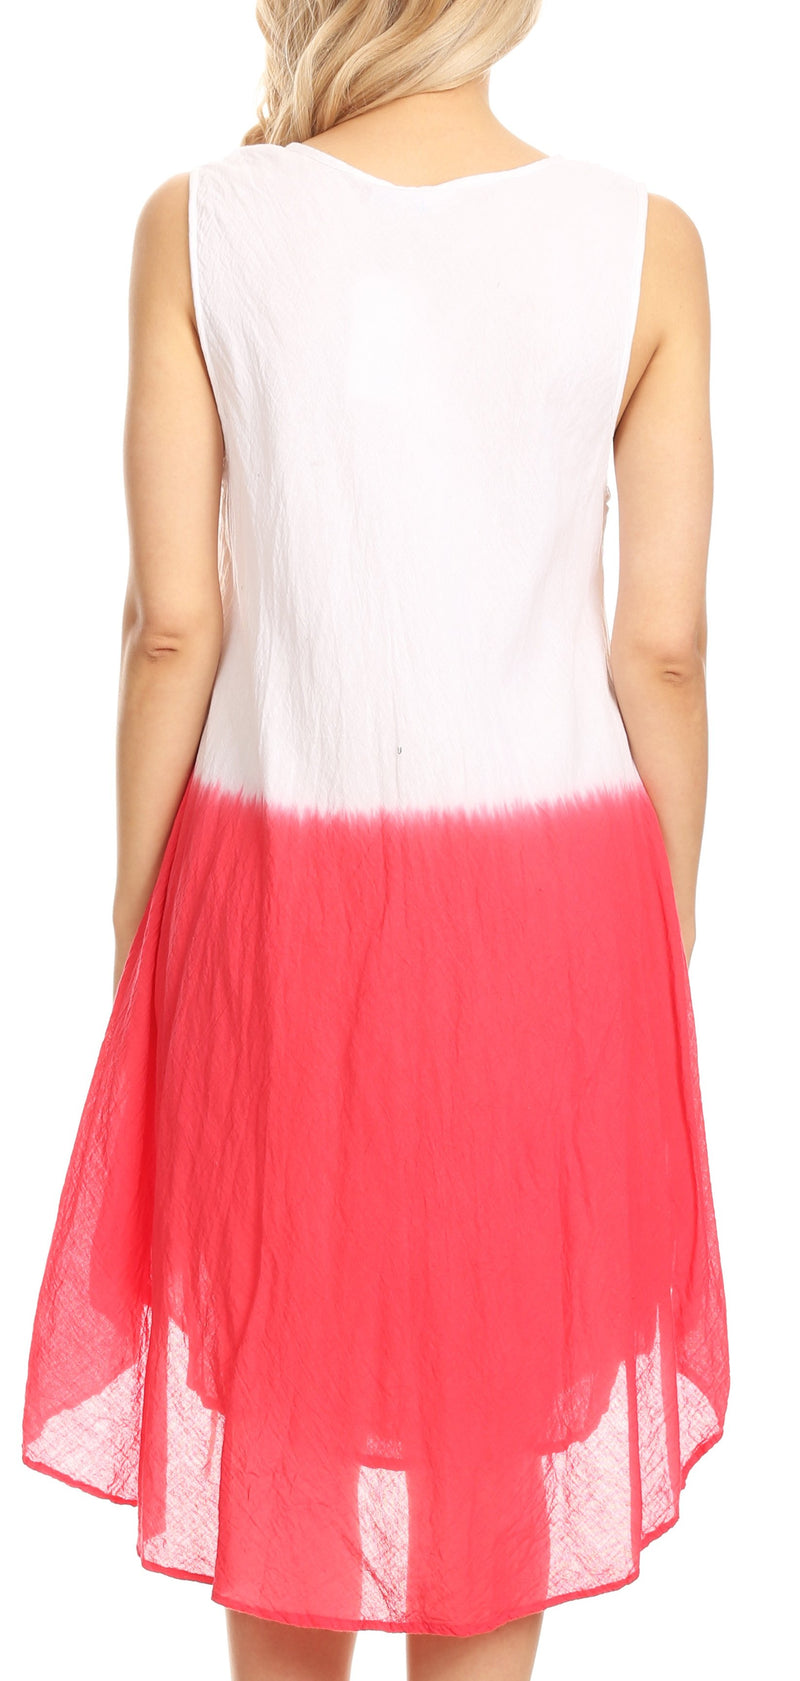 Sakkas Milana Light Summer Tie-dye Flowy Sleeveless Dress with String at Hem